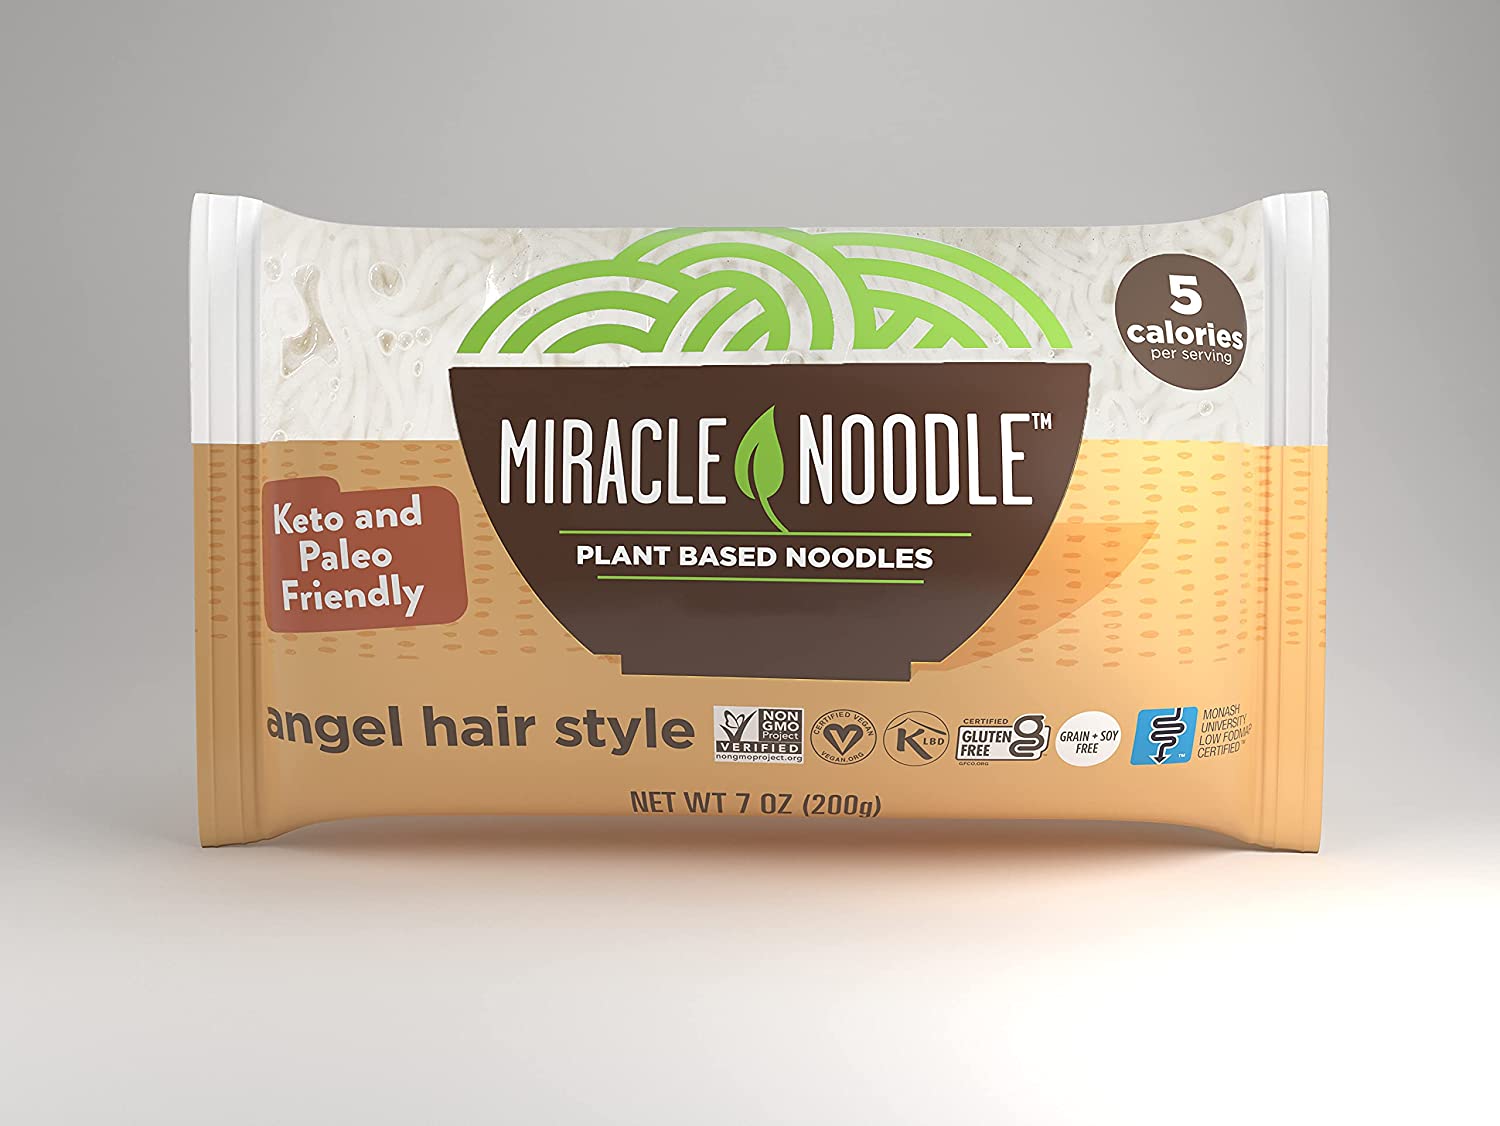 Miracle Noodle Plant Based Noodles